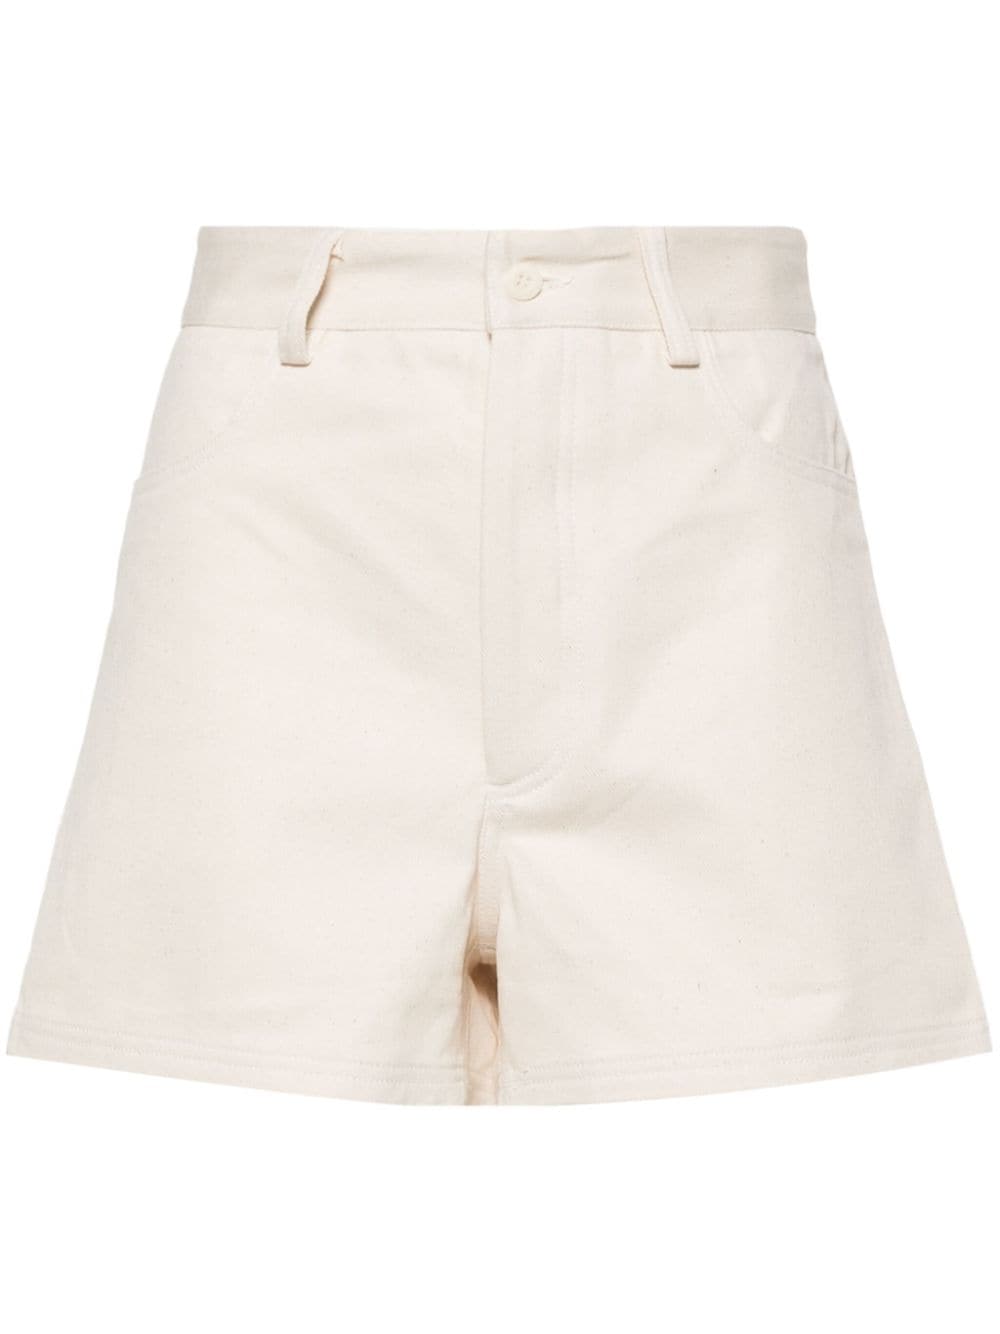 organic-cotton shorts